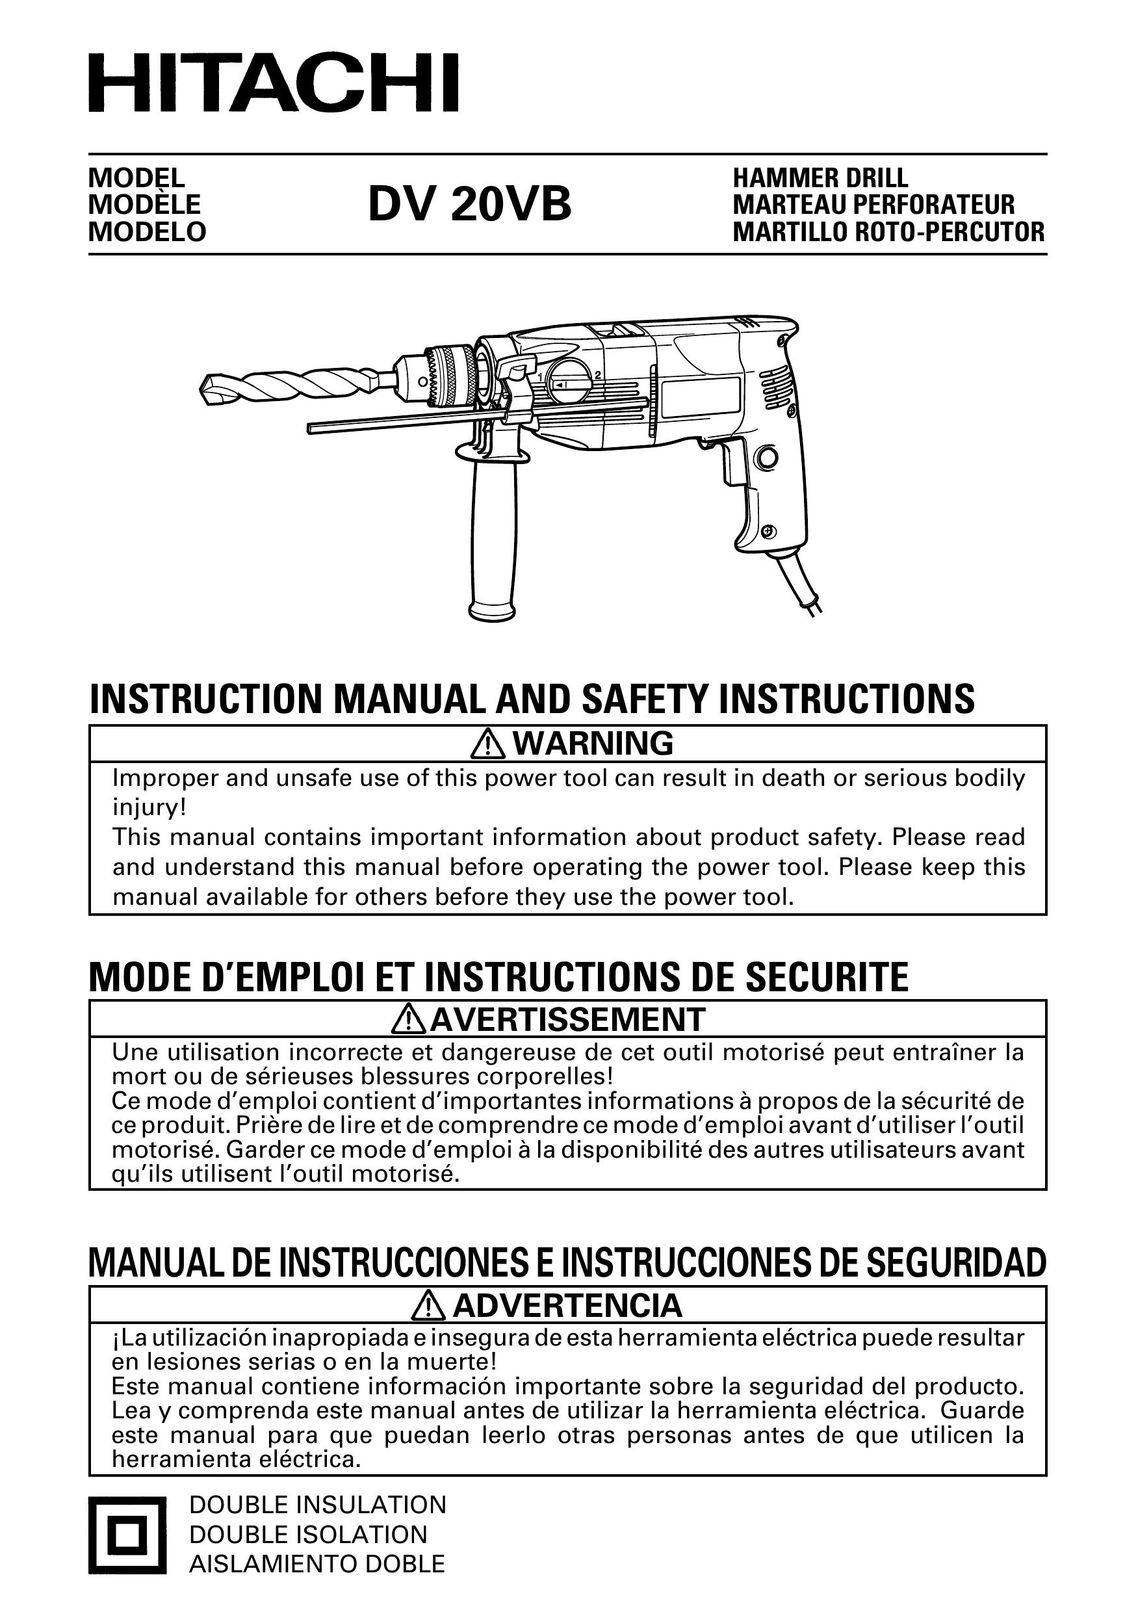 Hitachi DV 20VB Drill User Manual